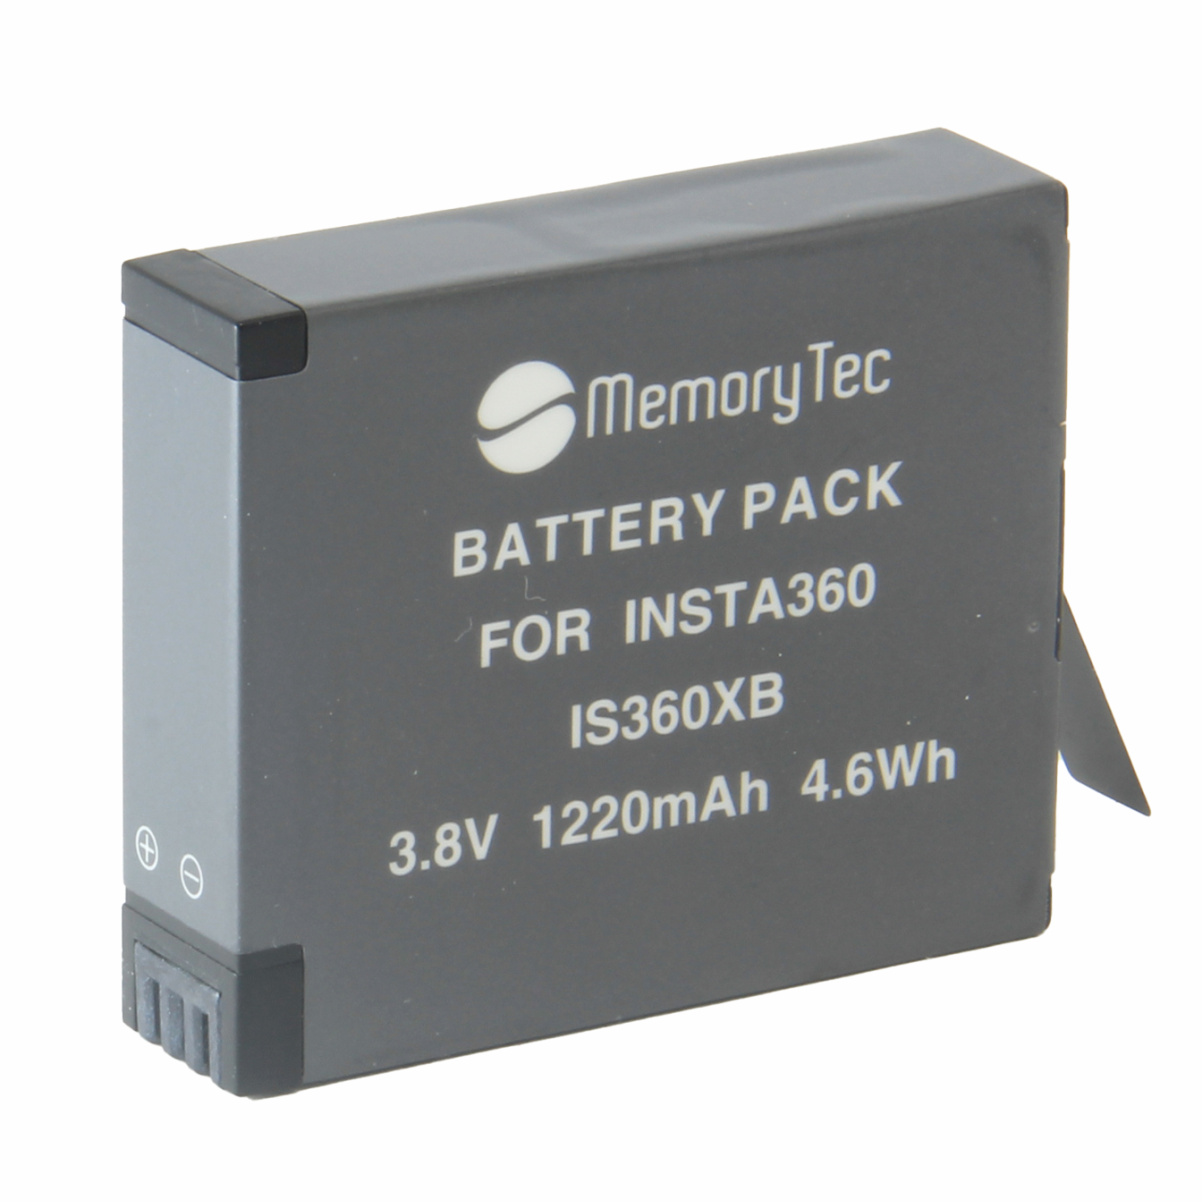 Kit 2 baterias para INSTA 360 IS360XB ONE X